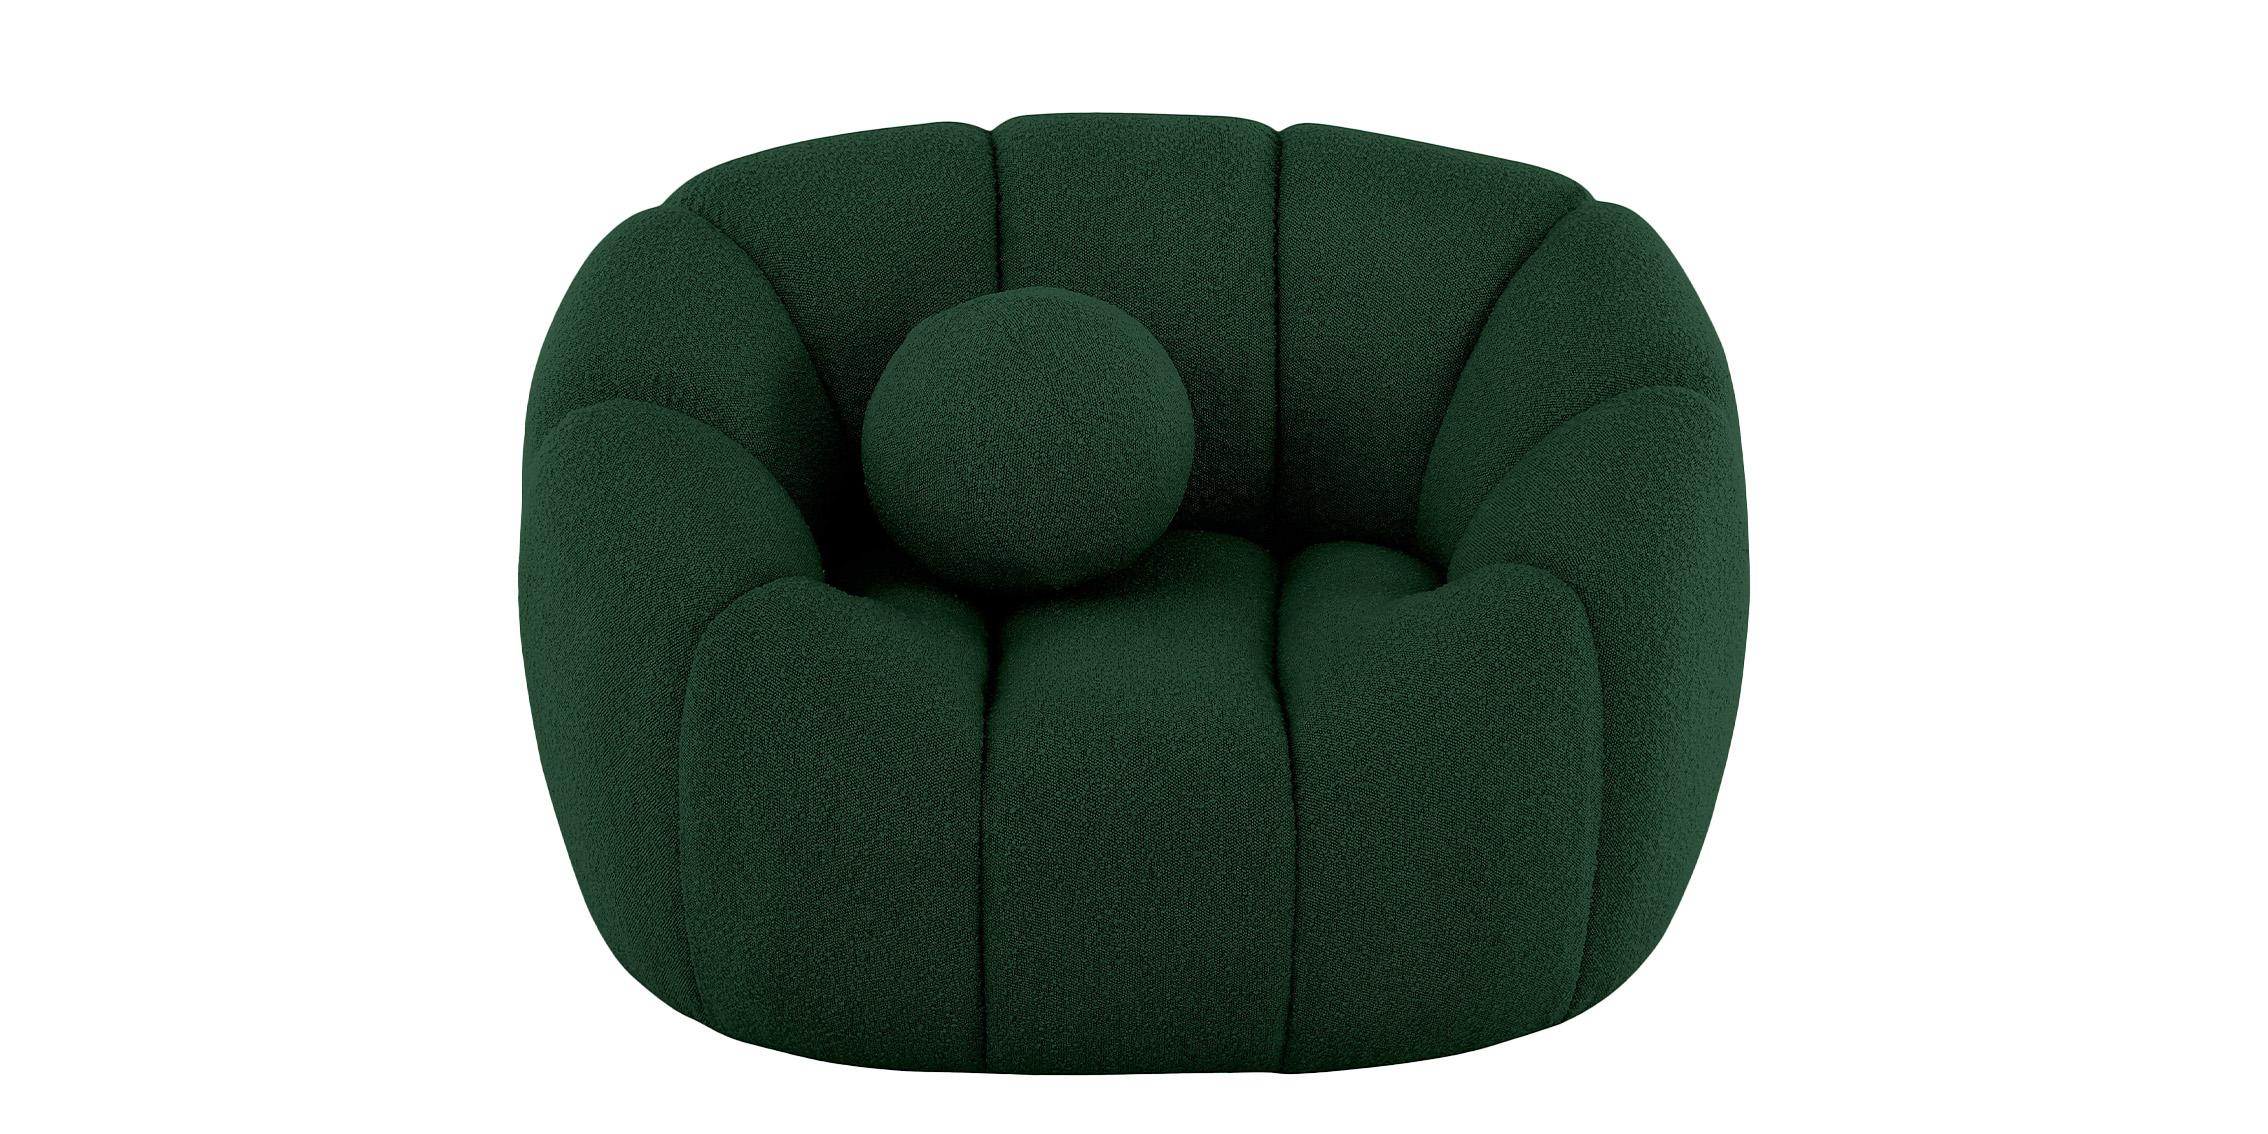 

    
Glam Green Boucle Channel Tufted Sofa Set 3P ELIJAH 644Green-S Meridian Modern
